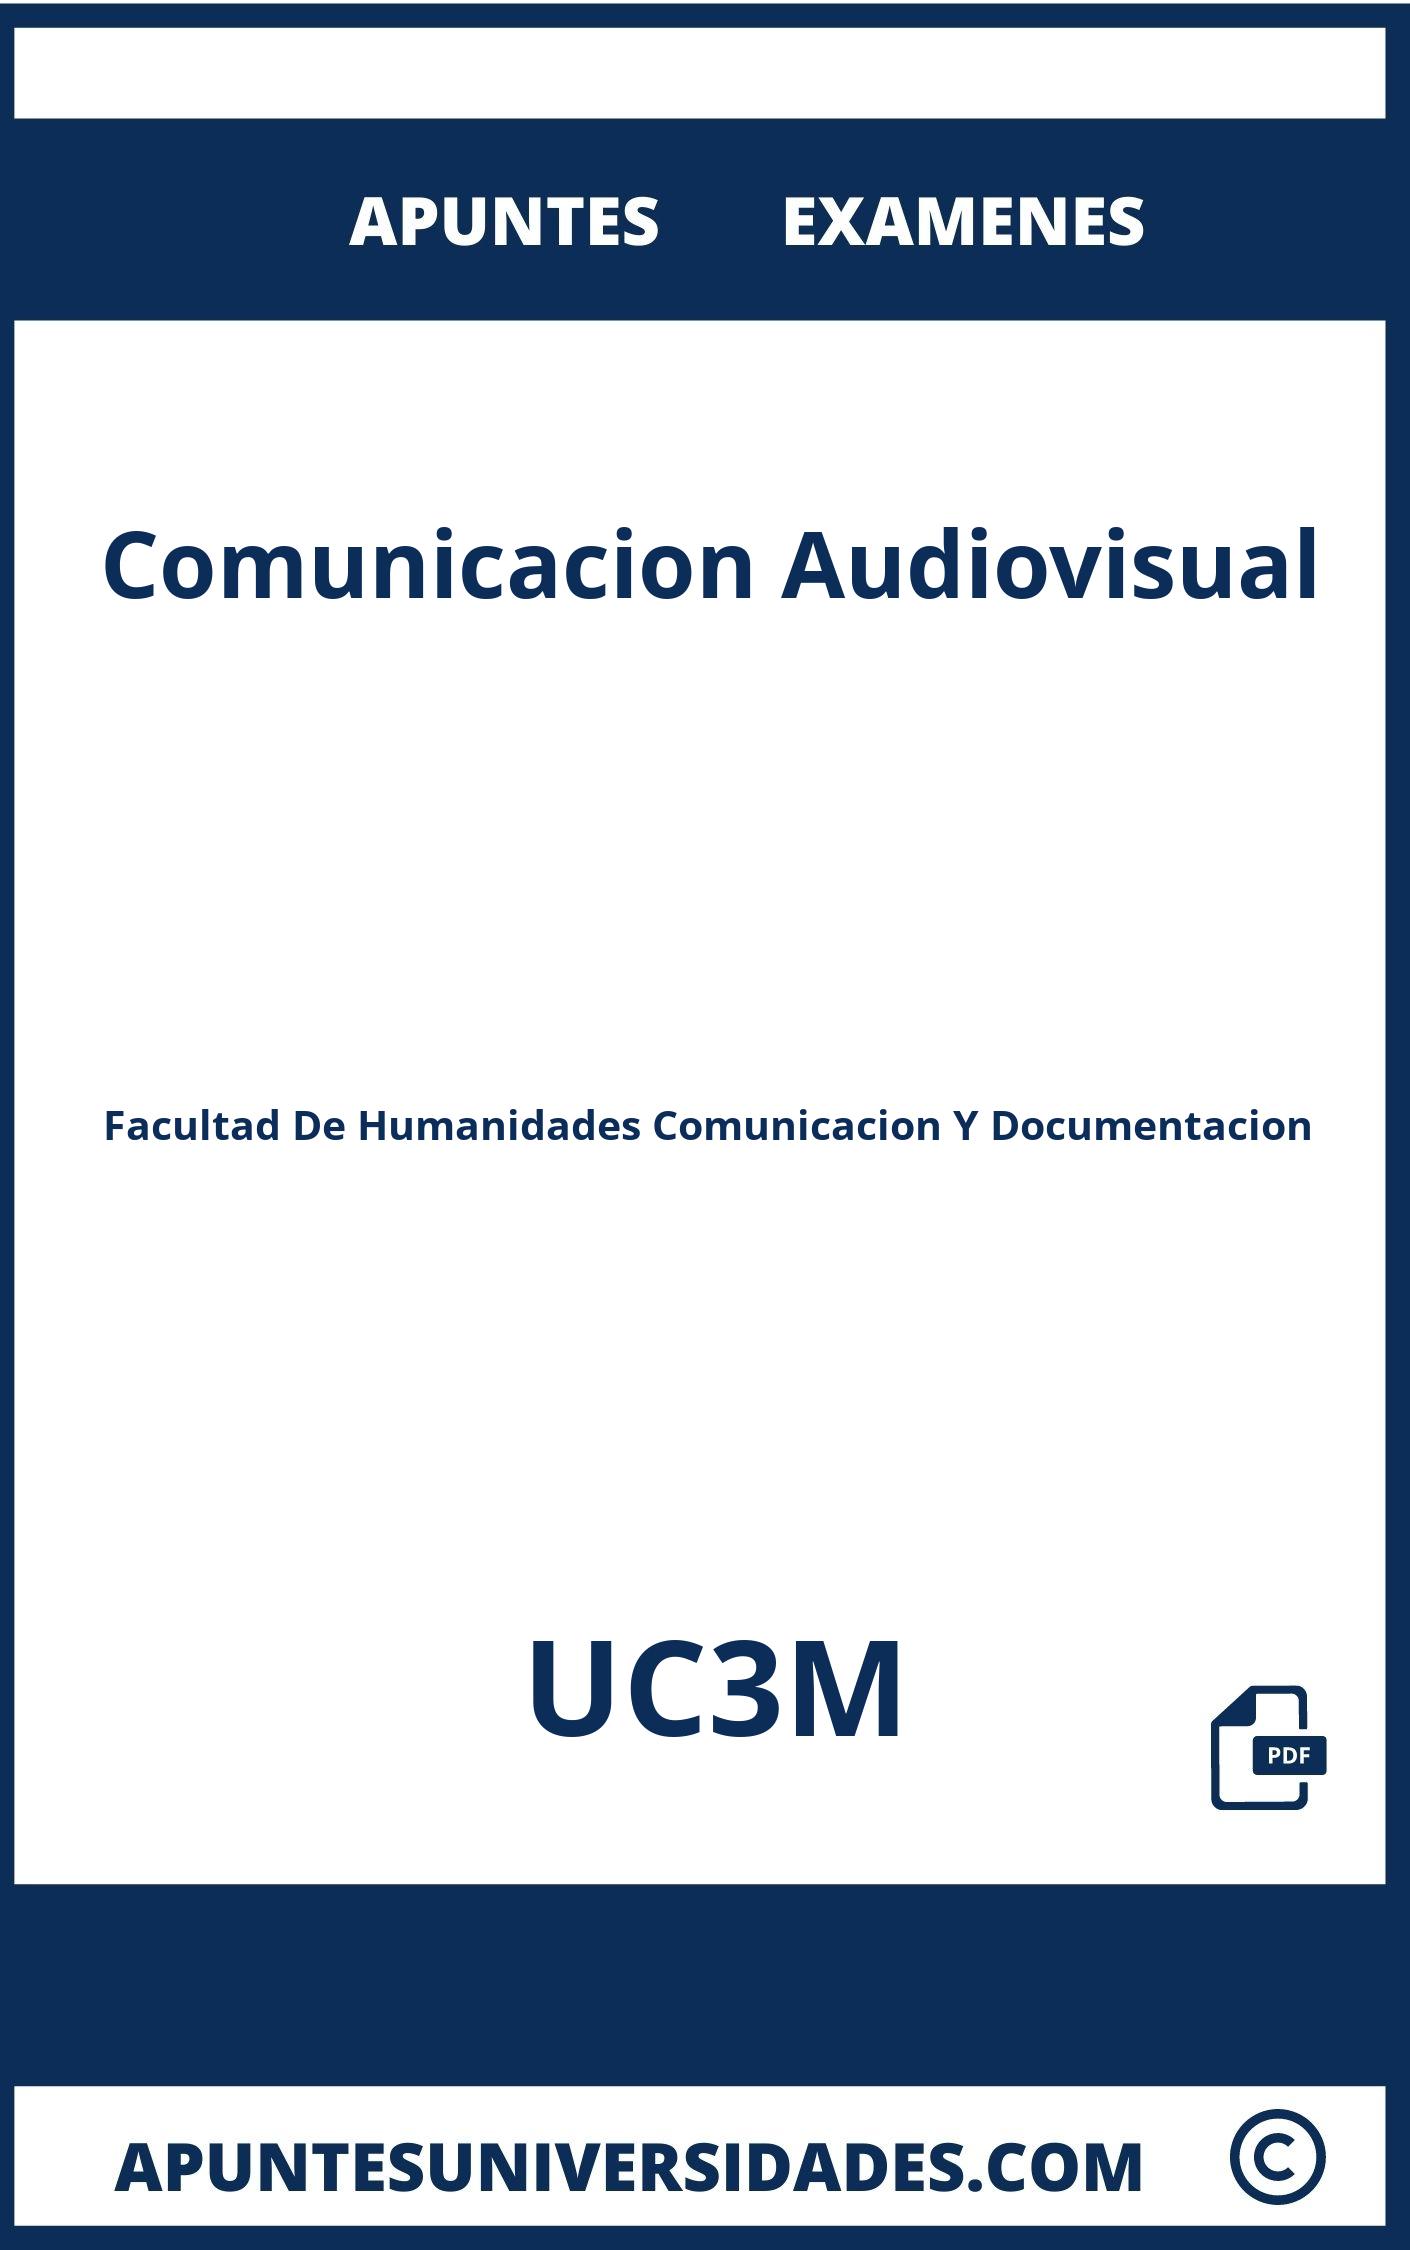 Examenes Apuntes Comunicacion Audiovisual UC3M